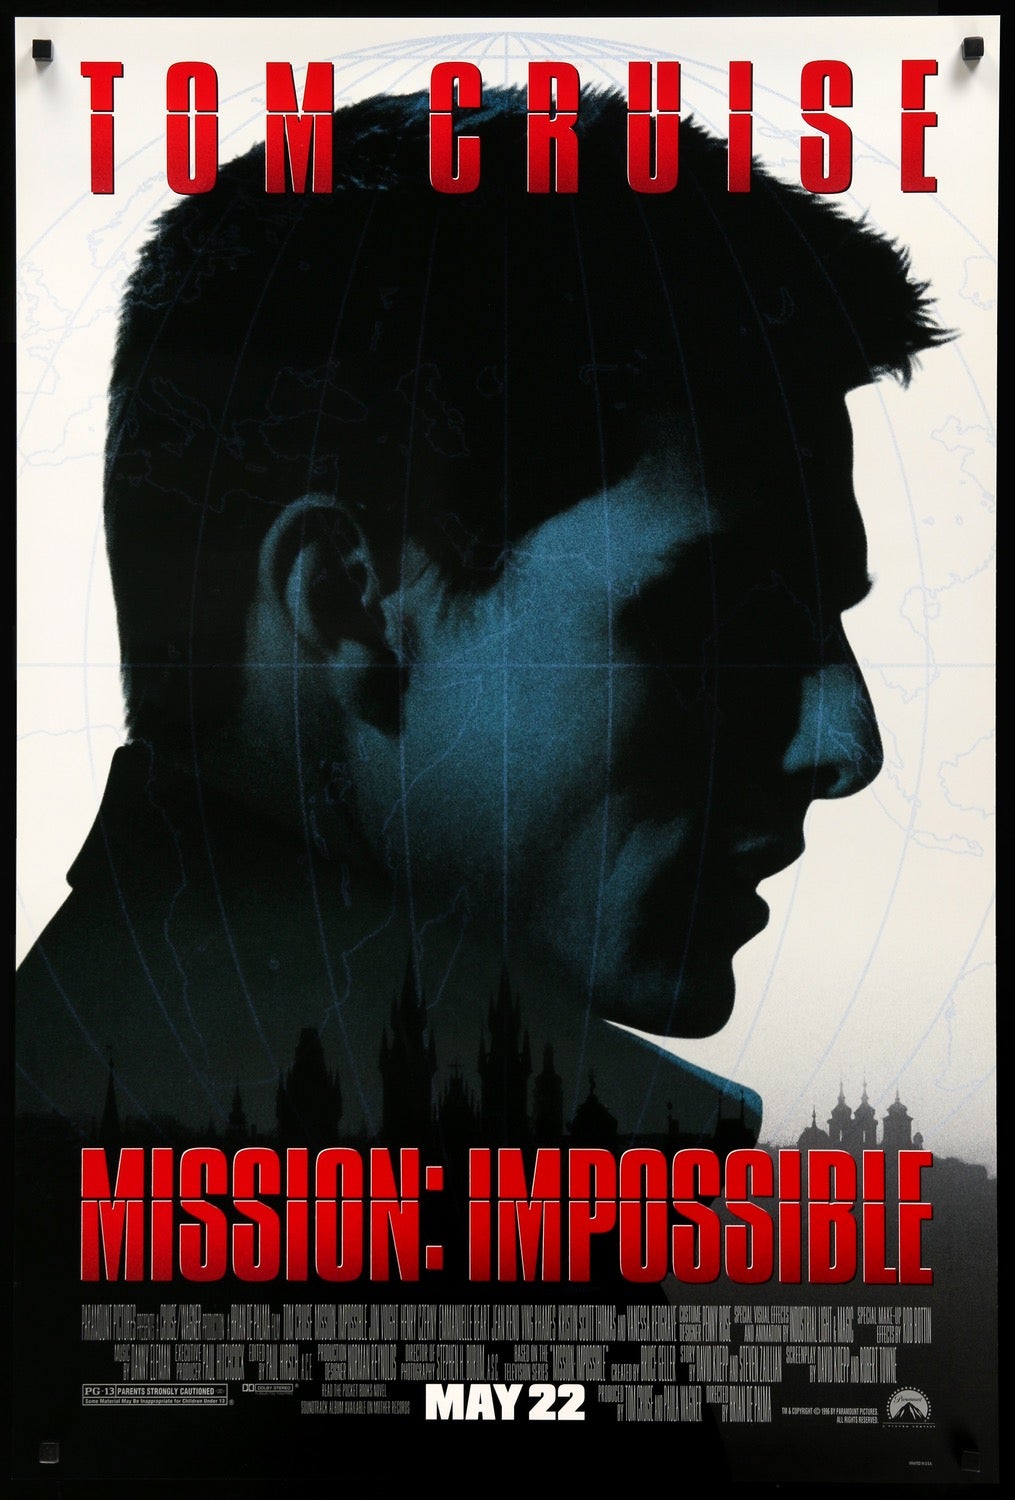 Mission Impossible (1996) original movie poster for sale at Original Film Art